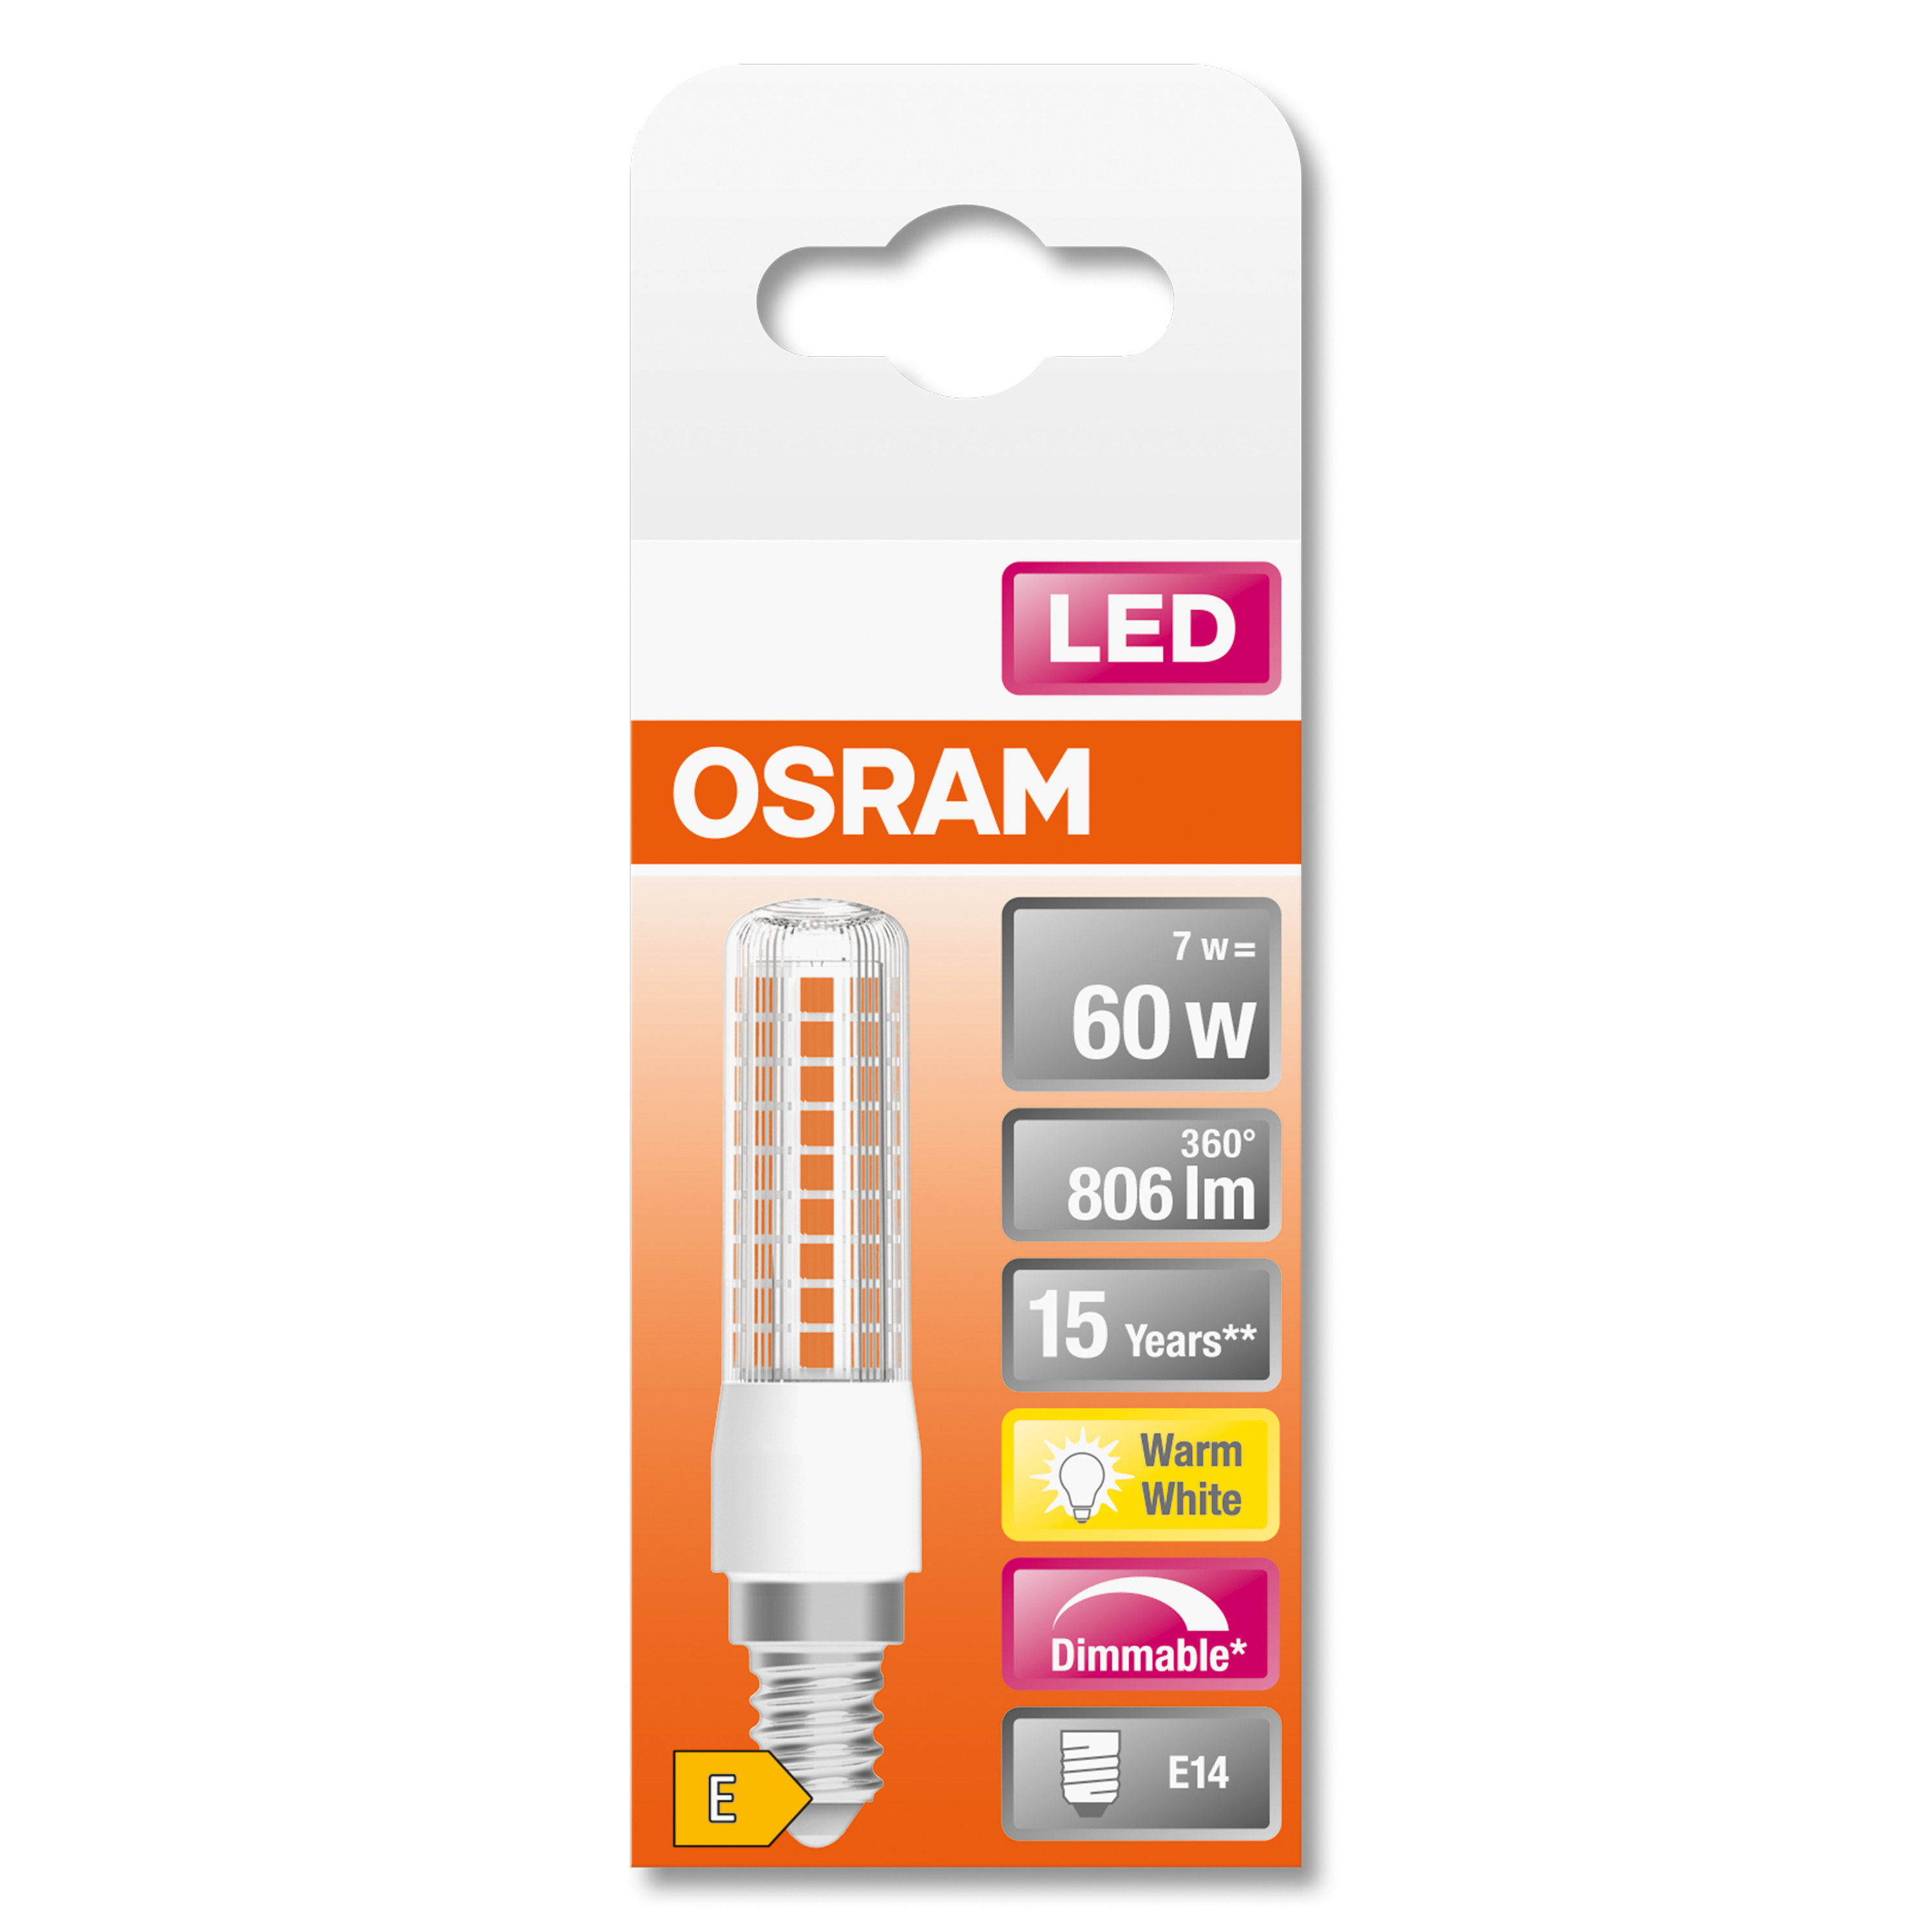 SPECIAL lumen Warmweiß 806 OSRAM  Lampe LED T DIM LED SLIM